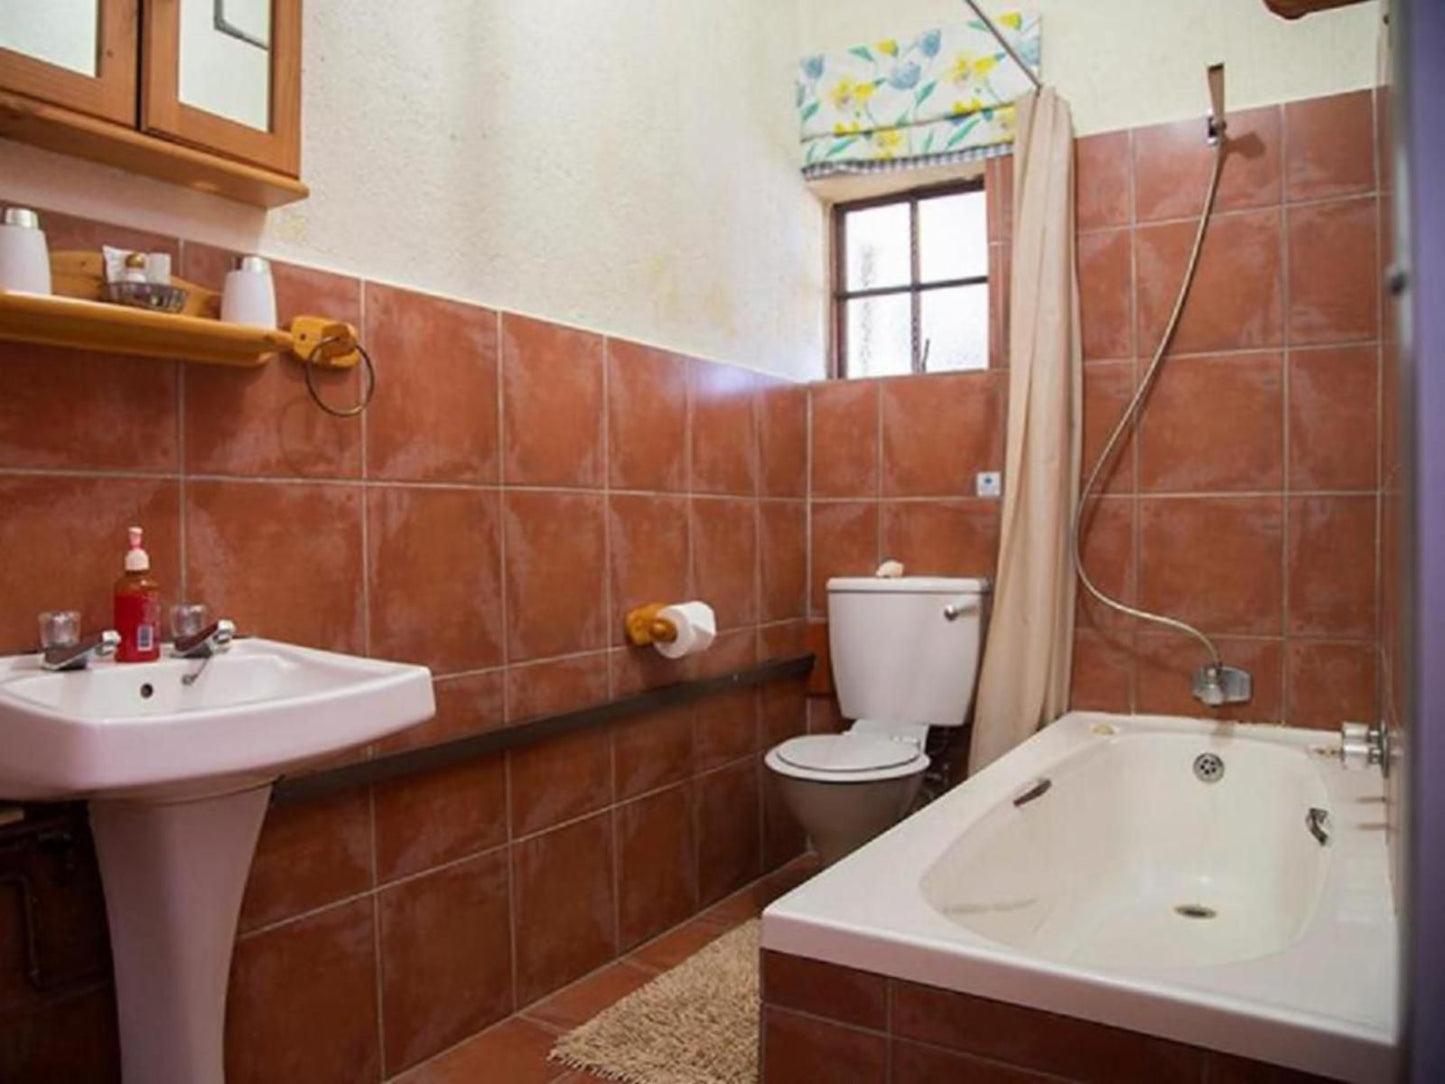 Haus Kopatsch Kiepersol Mpumalanga South Africa Bathroom